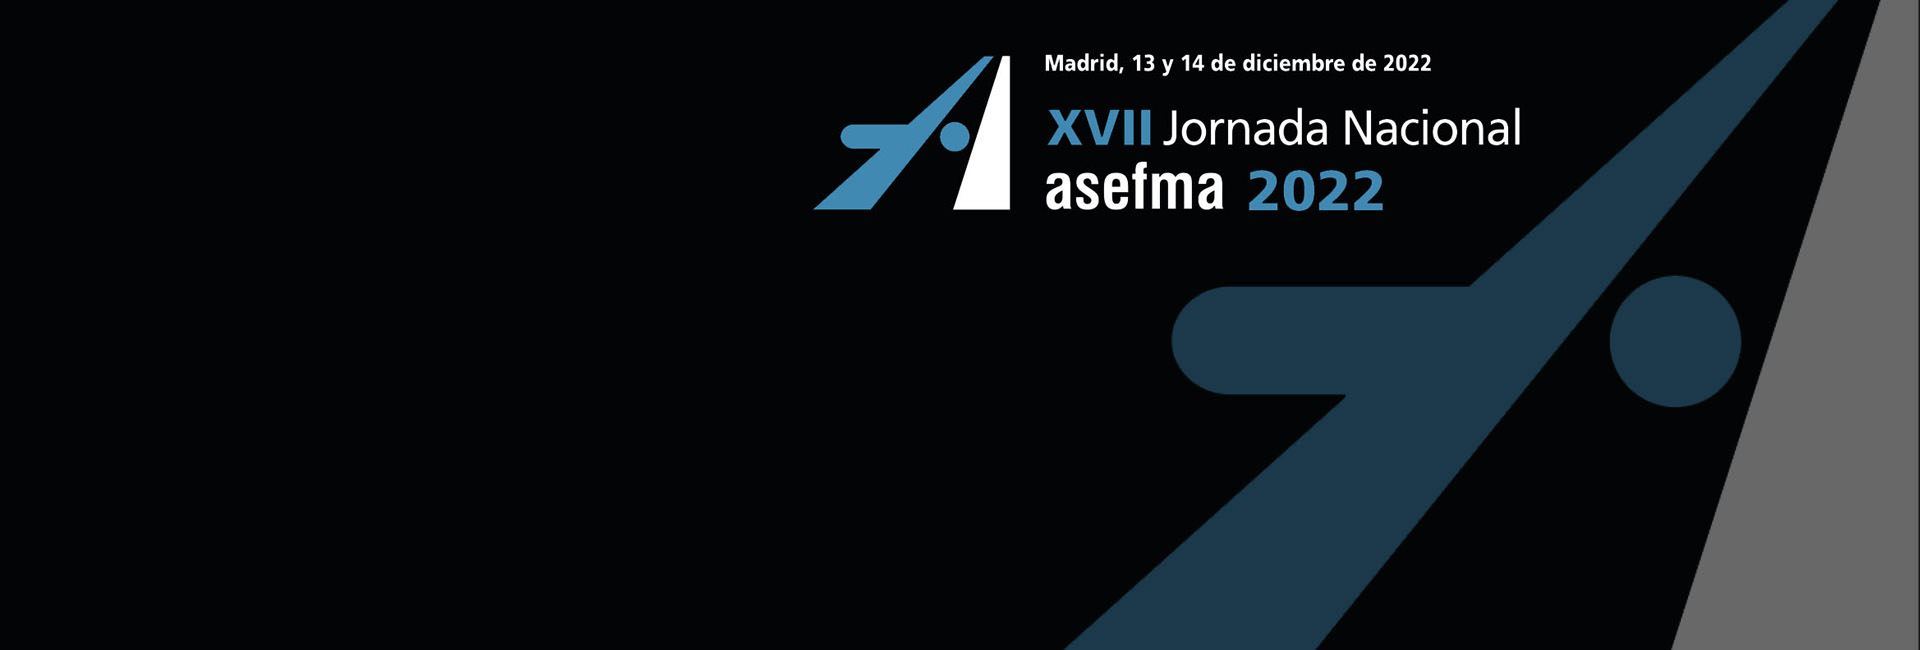 images/slider/jornada-nacional-asefma2.jpg